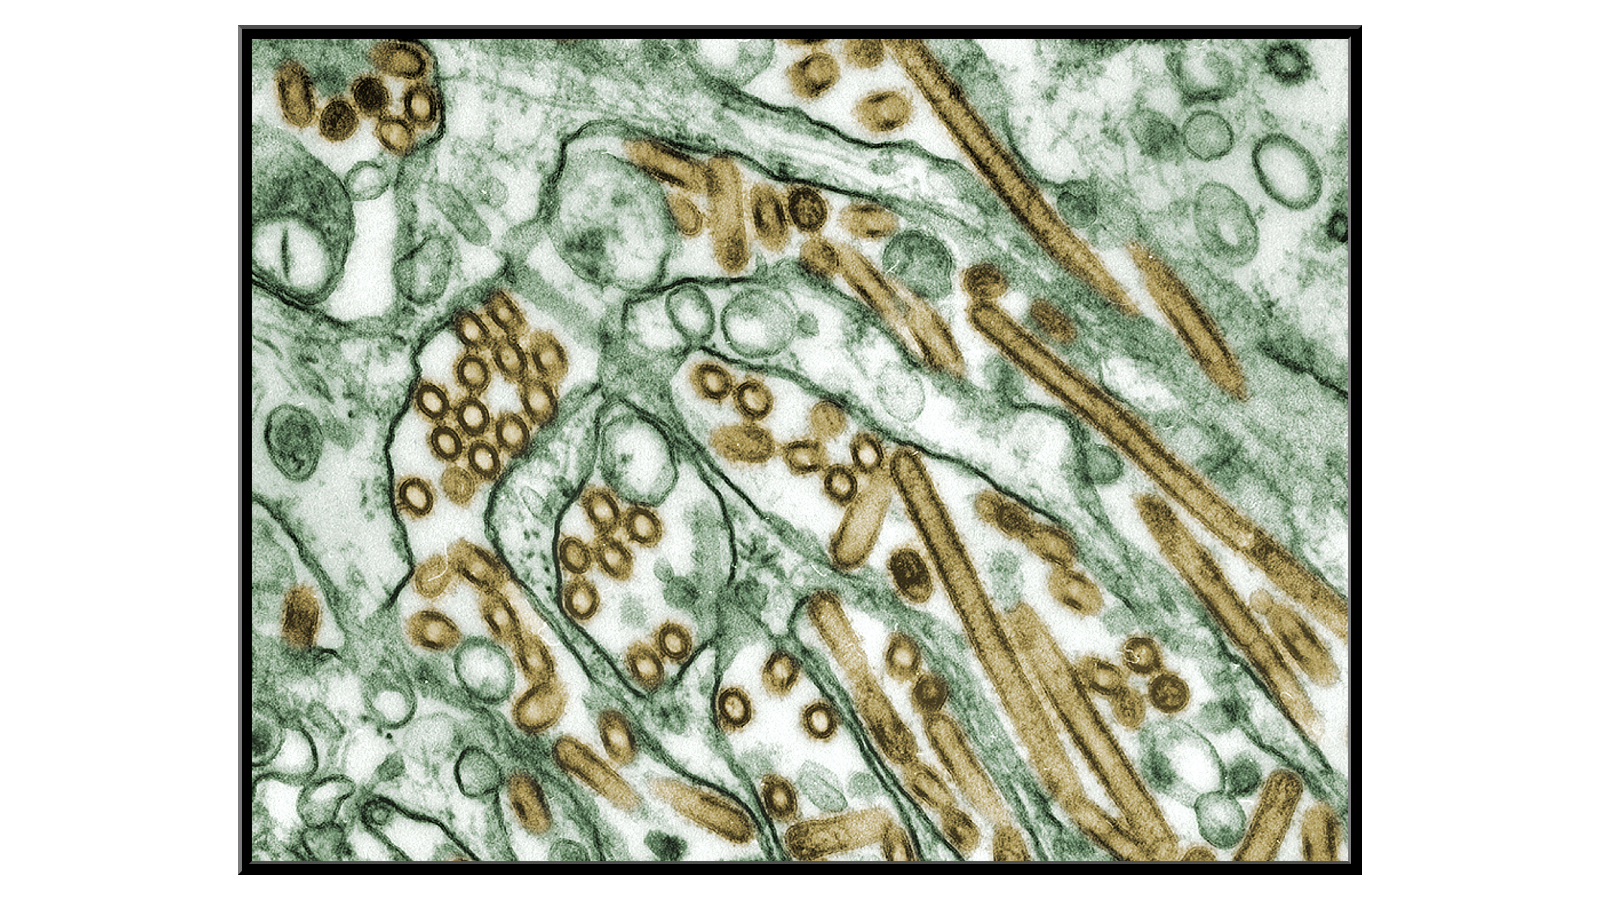 Avian Influenza A H5N1 Virus - 1997 Image